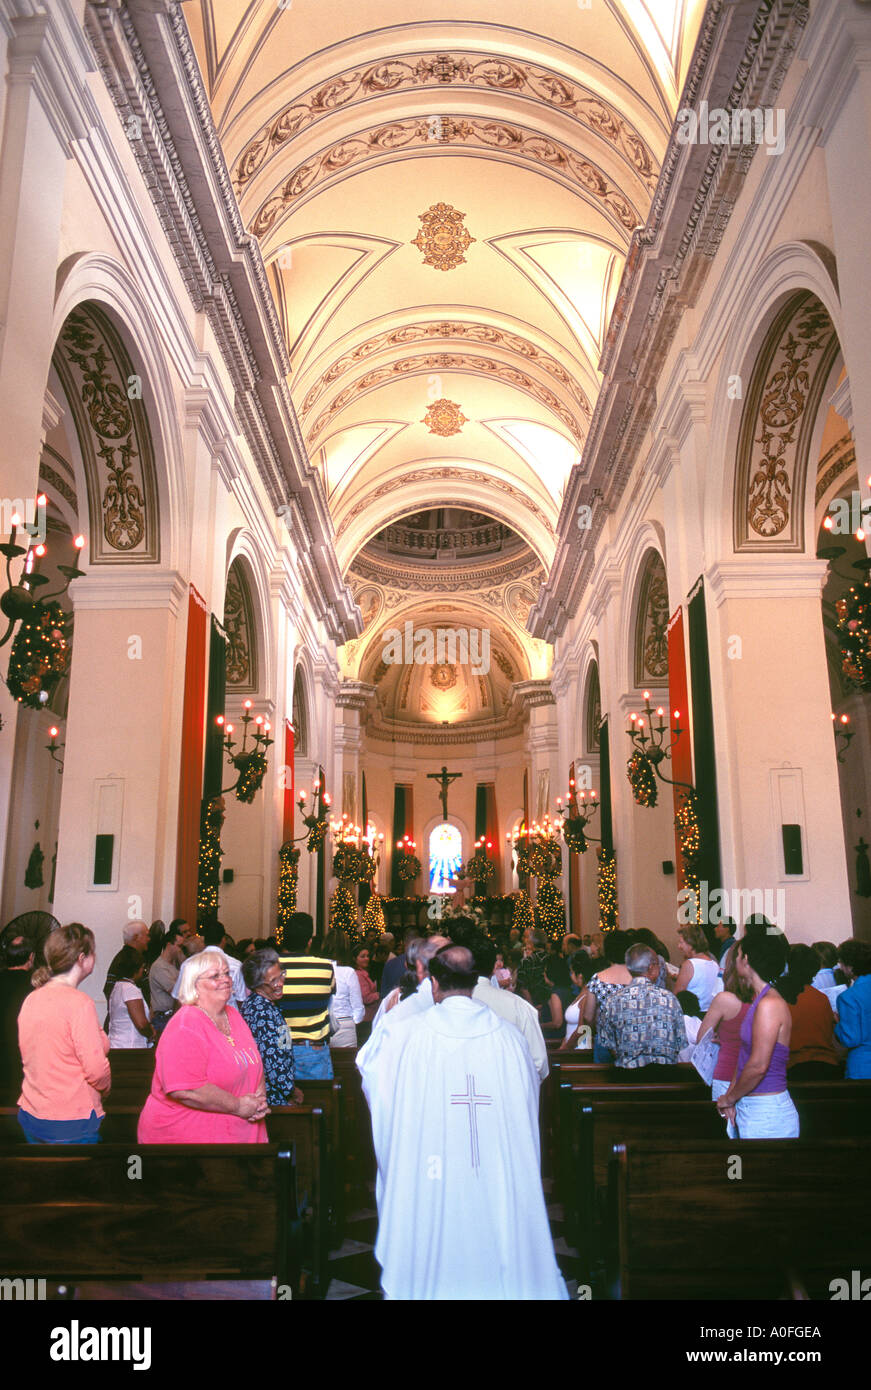 Cathedral of Old San Juan Bautista Puerto Rico Interior at Christmas time Stock Photo